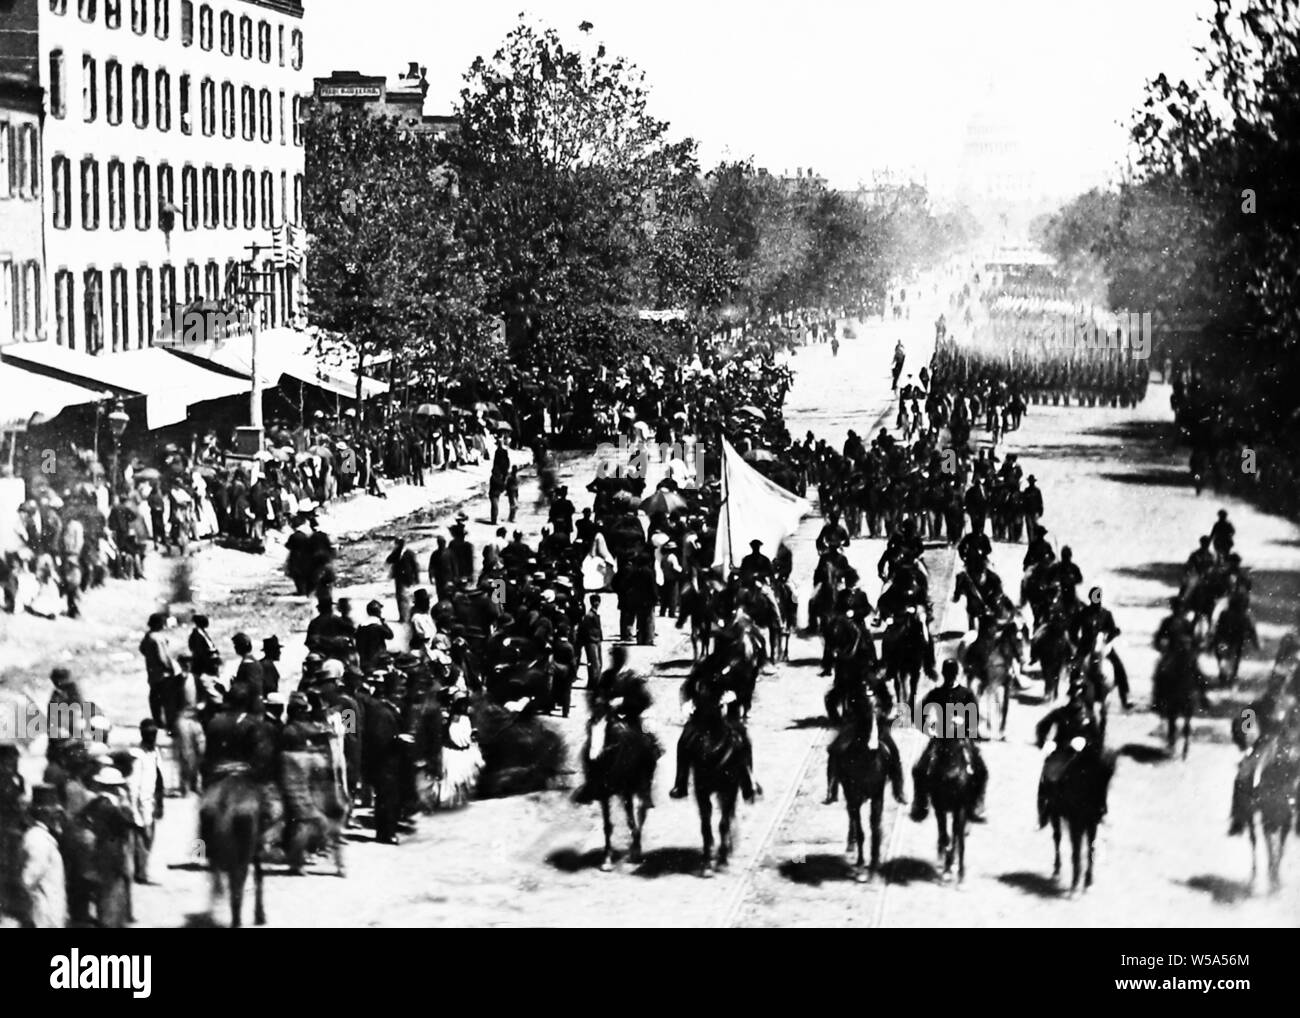 Union Army parade in 1865, Pennsylvania Avenue, Washington DC, USA Stock Photo